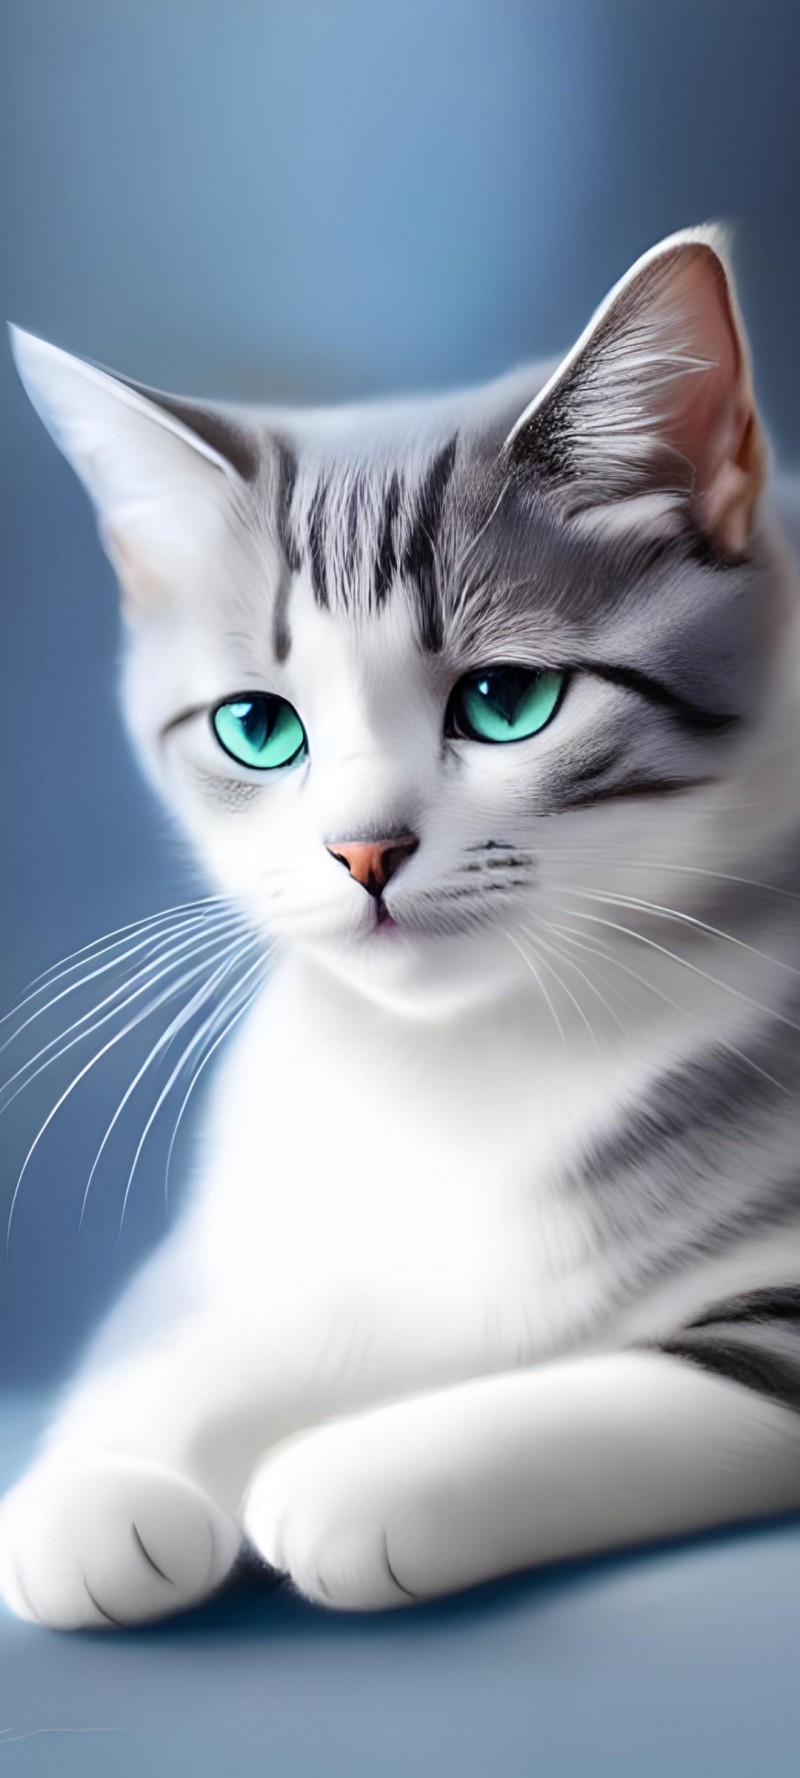 download 4k cat images  - 1080x2400.jpg